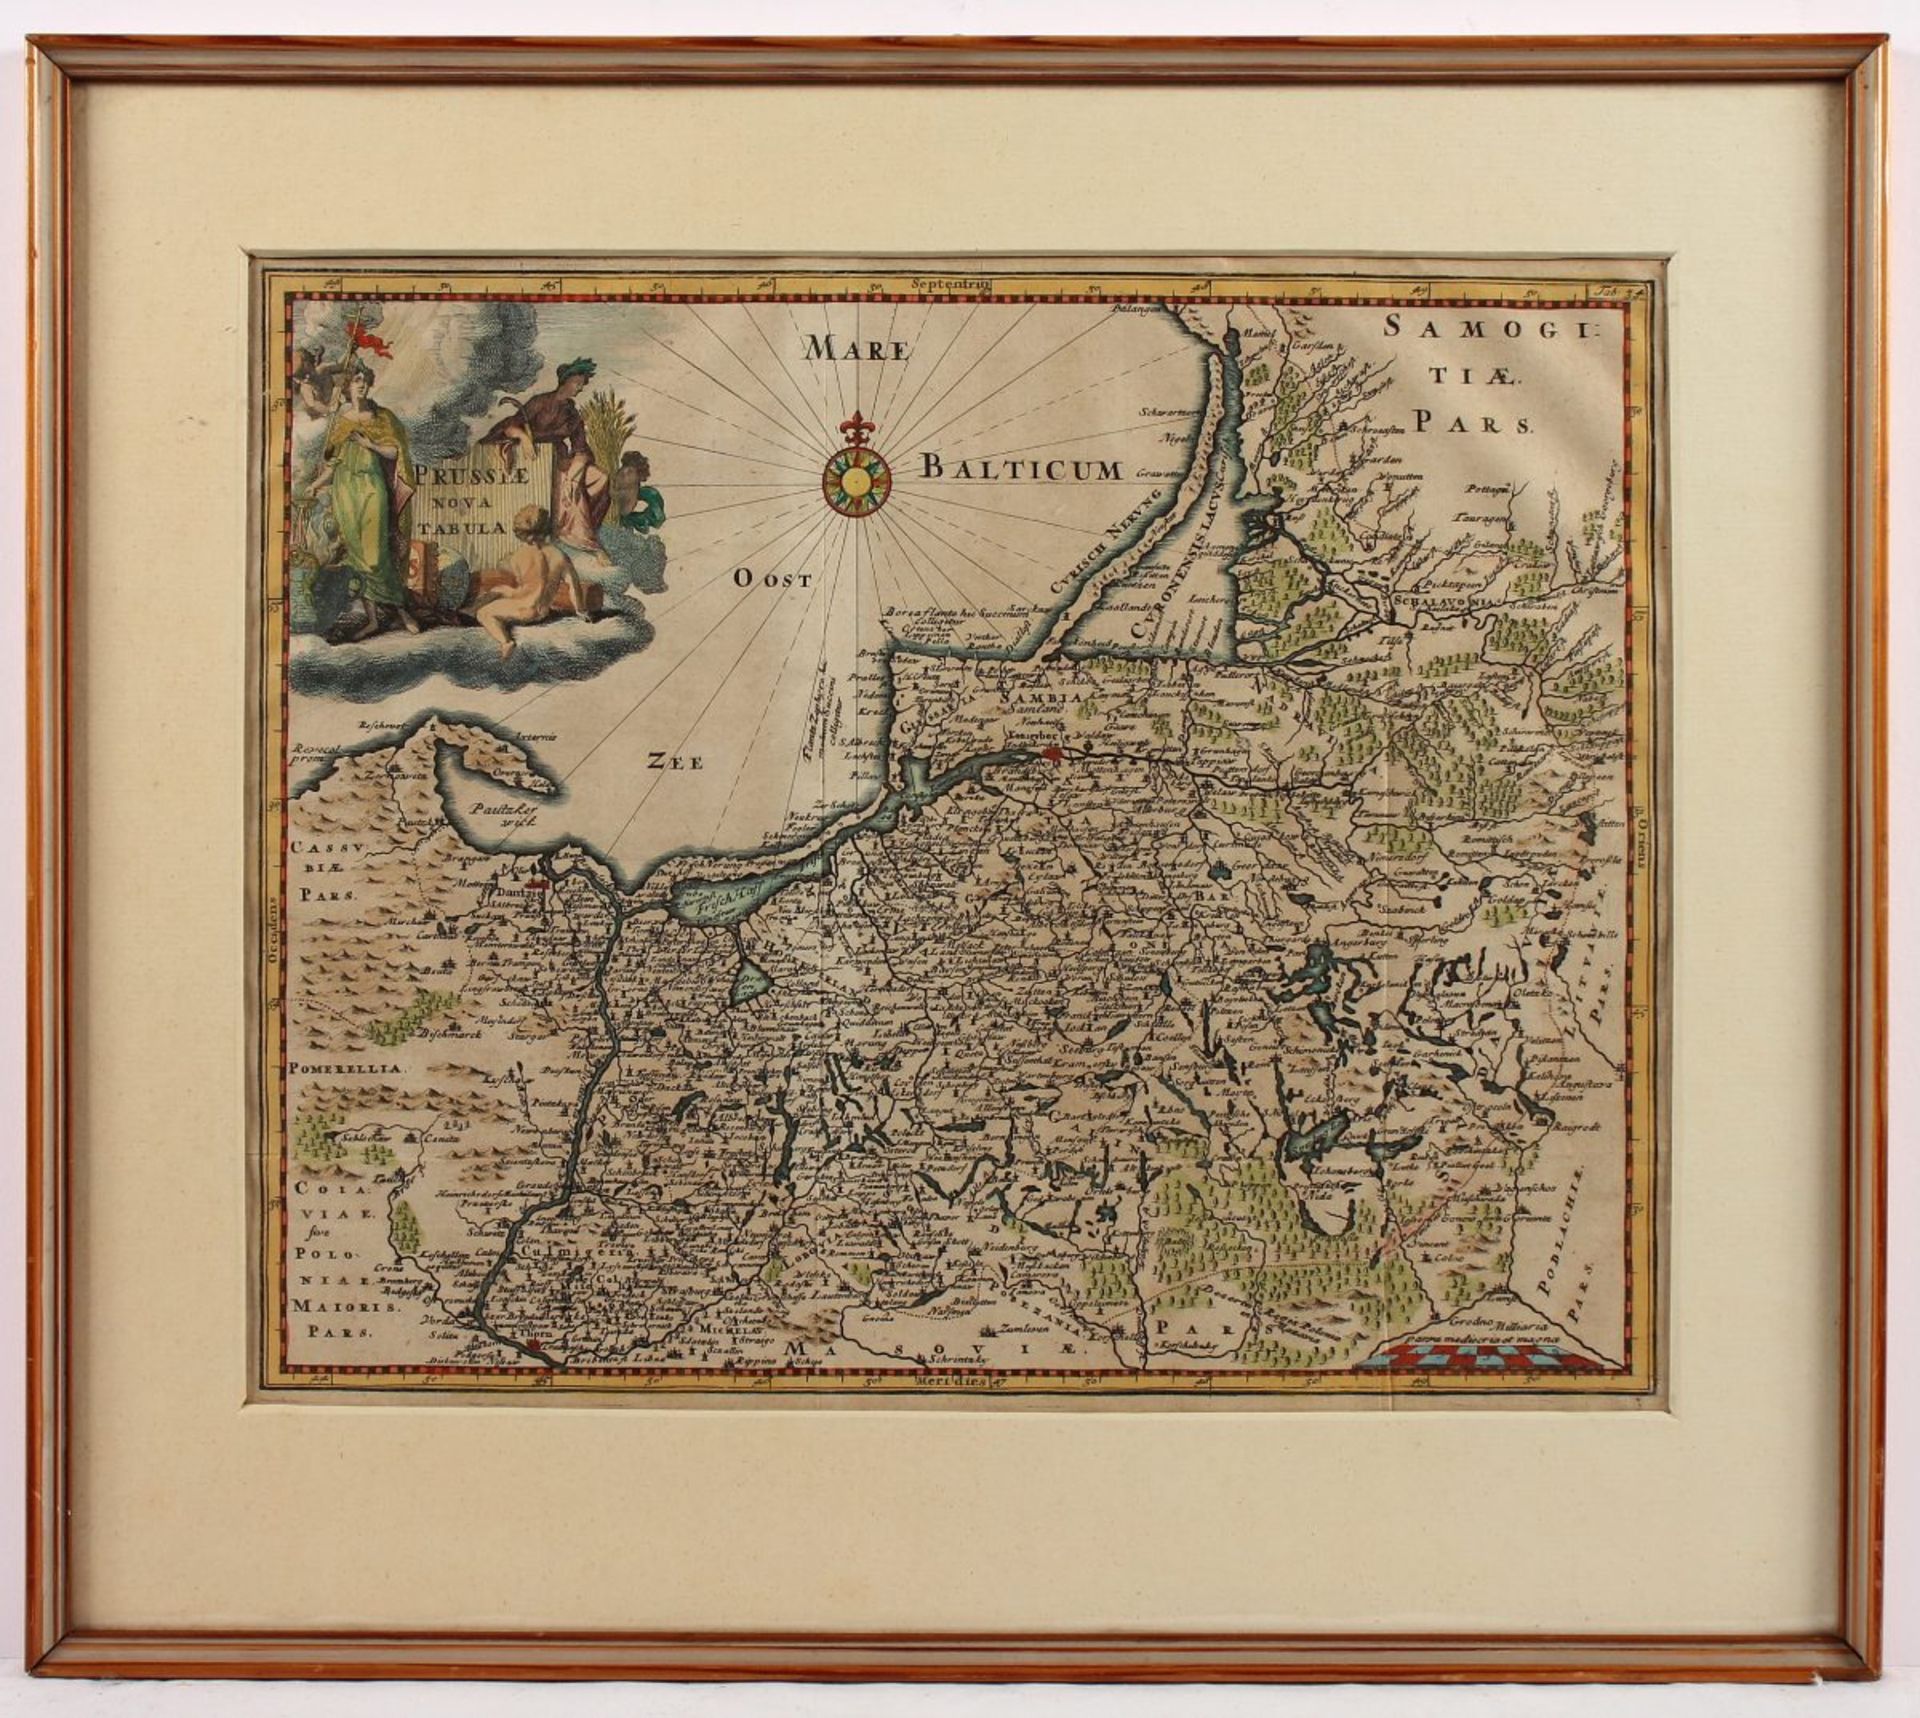 PREUSSEN, Clüver, Philipp, "Prussiae Nova Tabula", kolorierter Kupferstich, 27 x 32,5, Amsterdam